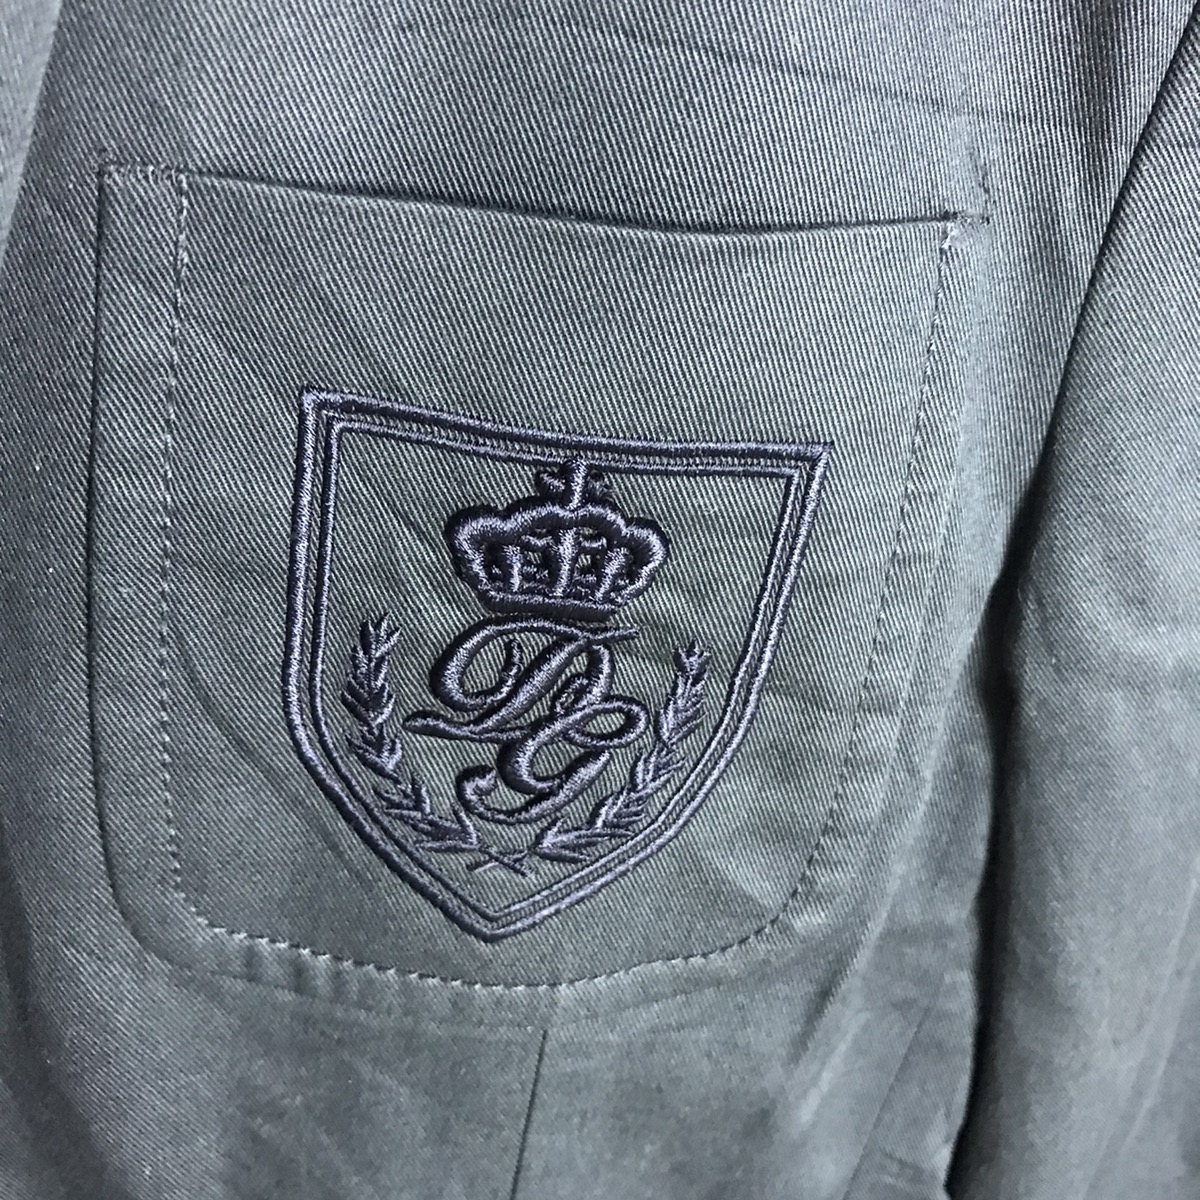 Dolce & gabbana embroid logo cotton blazer - 4